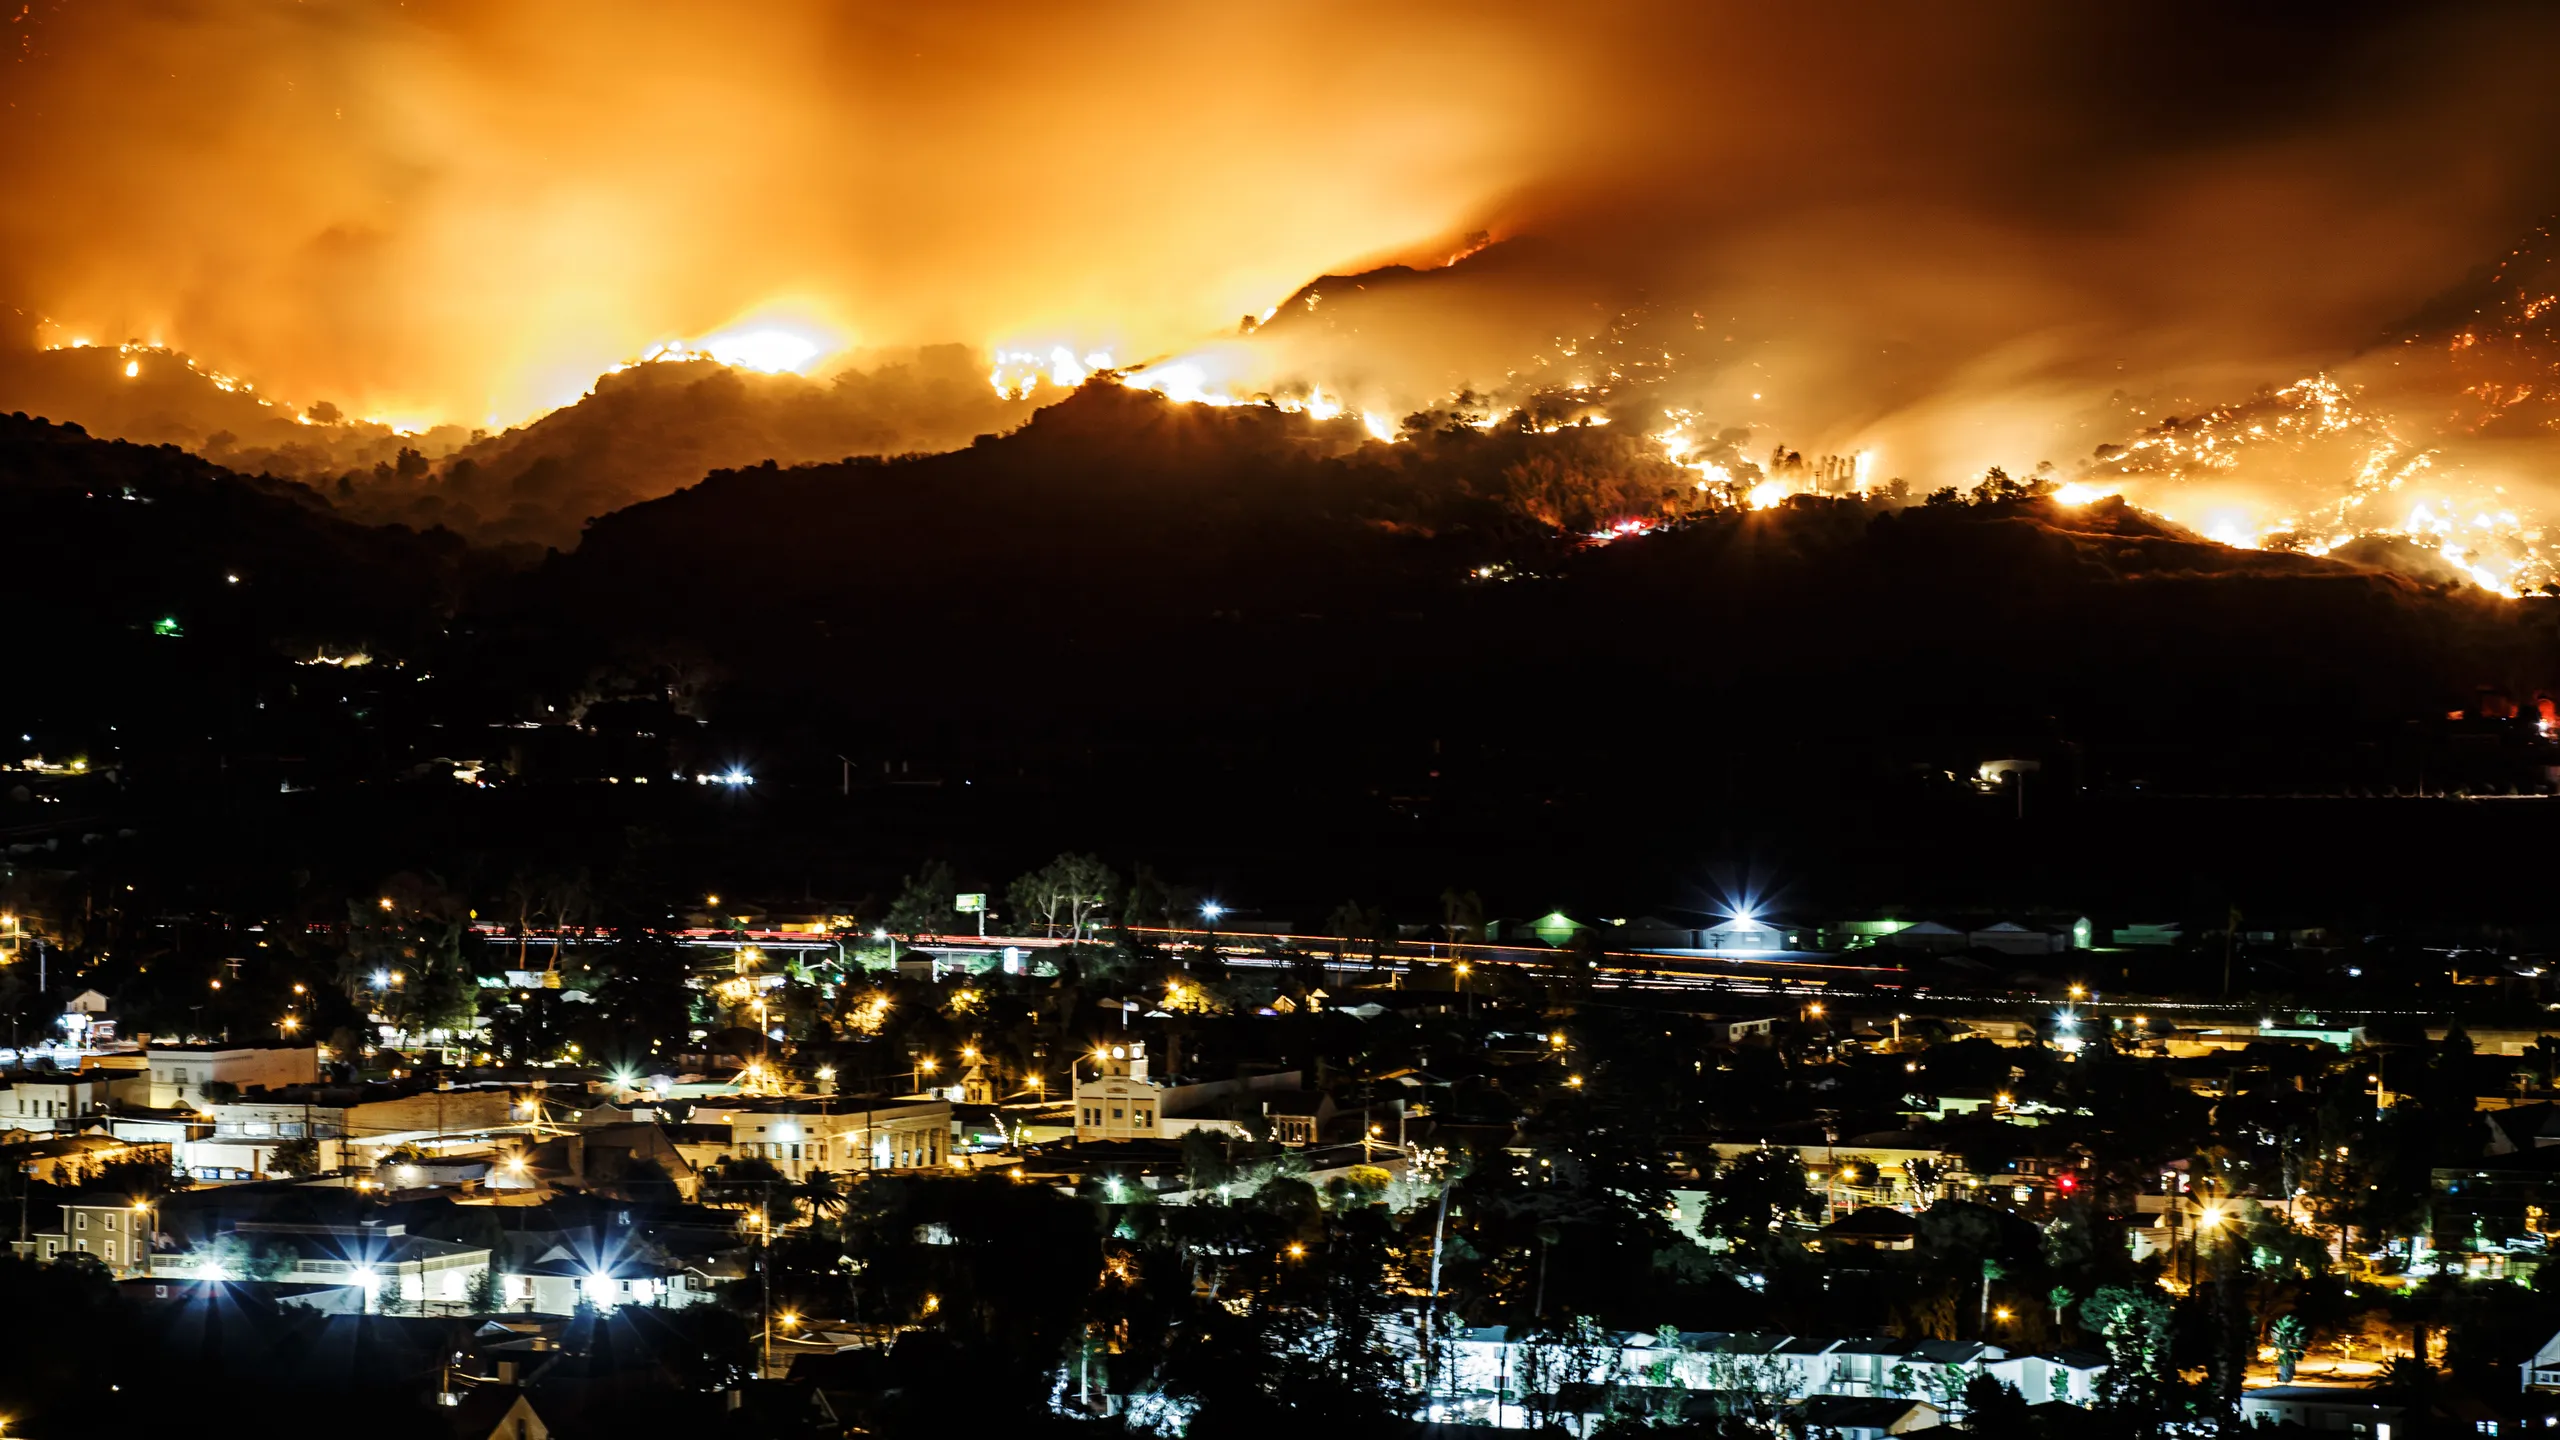 California Wildfire Grows